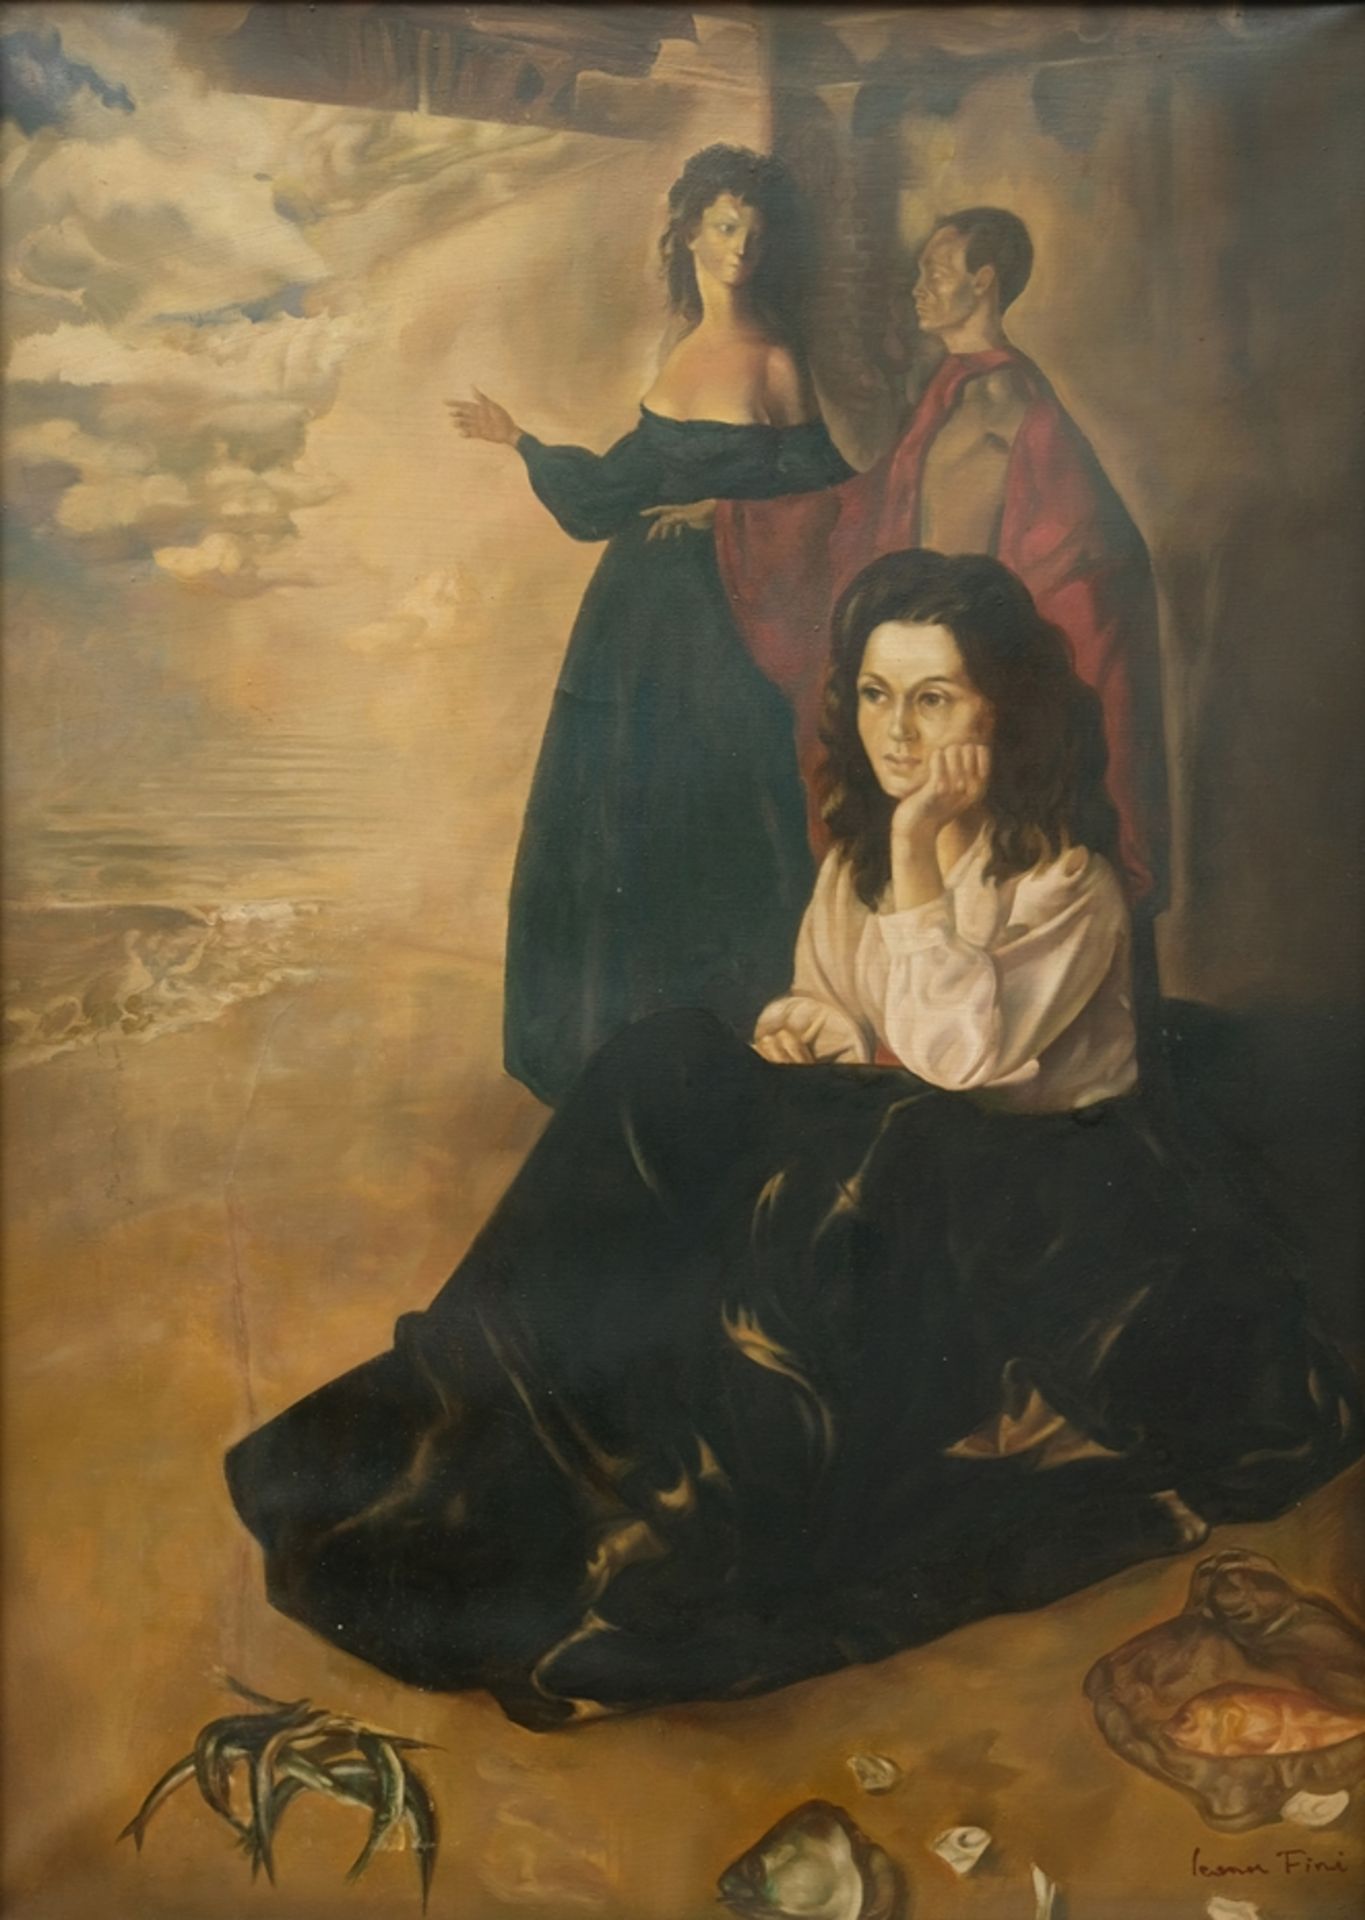 Fini, Leonor (1907-1996) Sitting woman on the beach, oil on canvas.